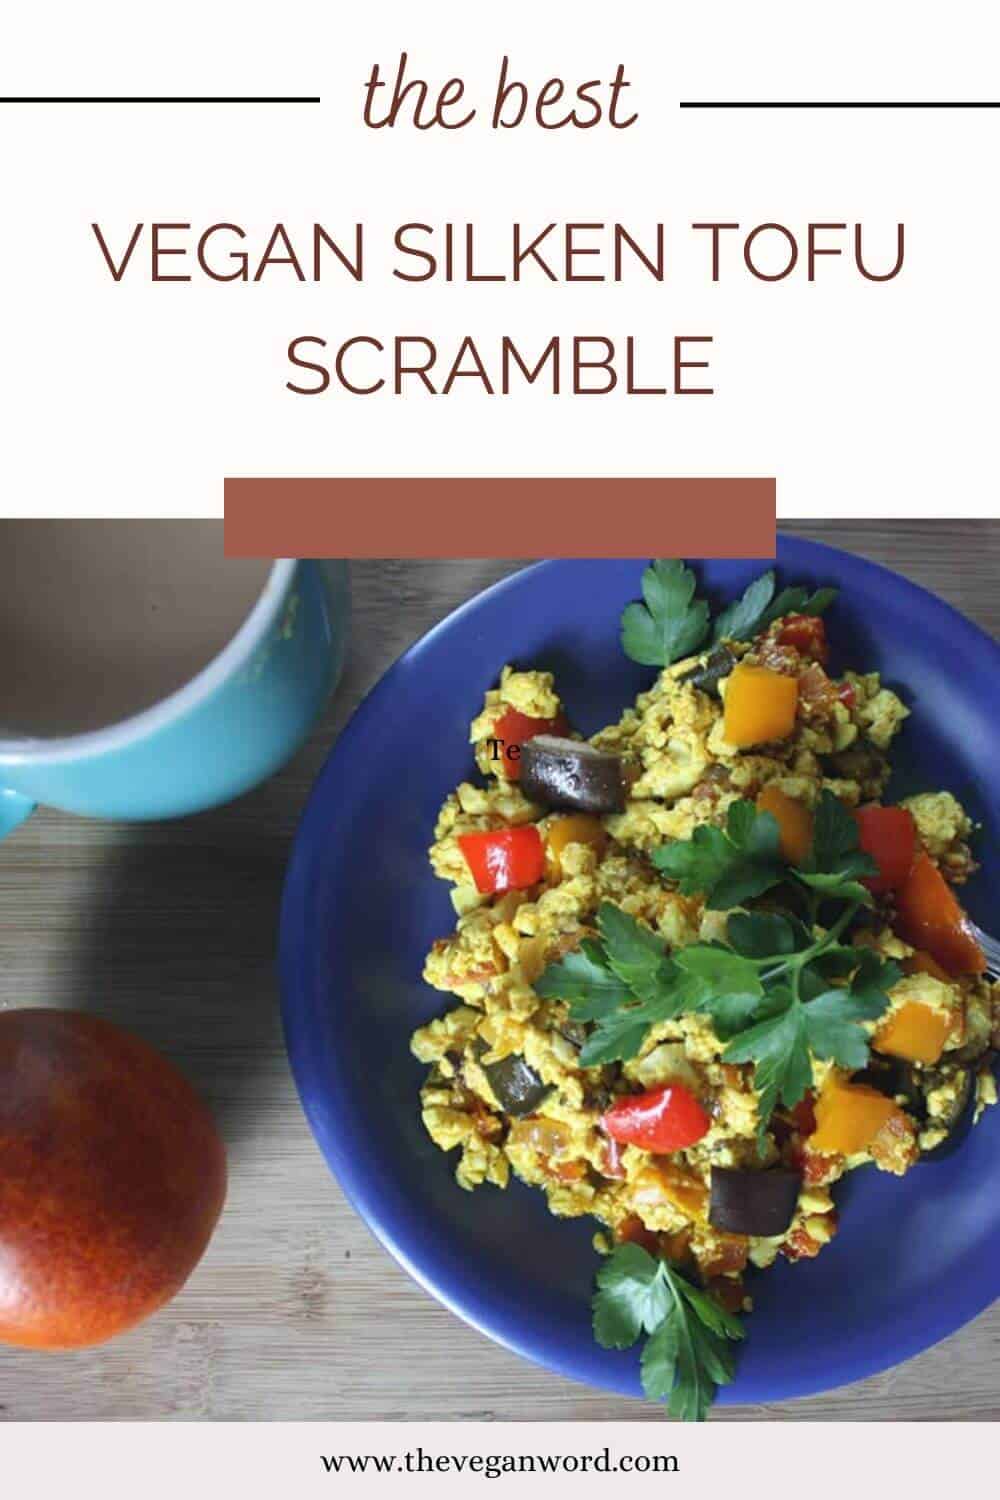 Looking for a fast & tasty tofu scramble? Here's how to make vegan tofu scramble in 10 minutes!